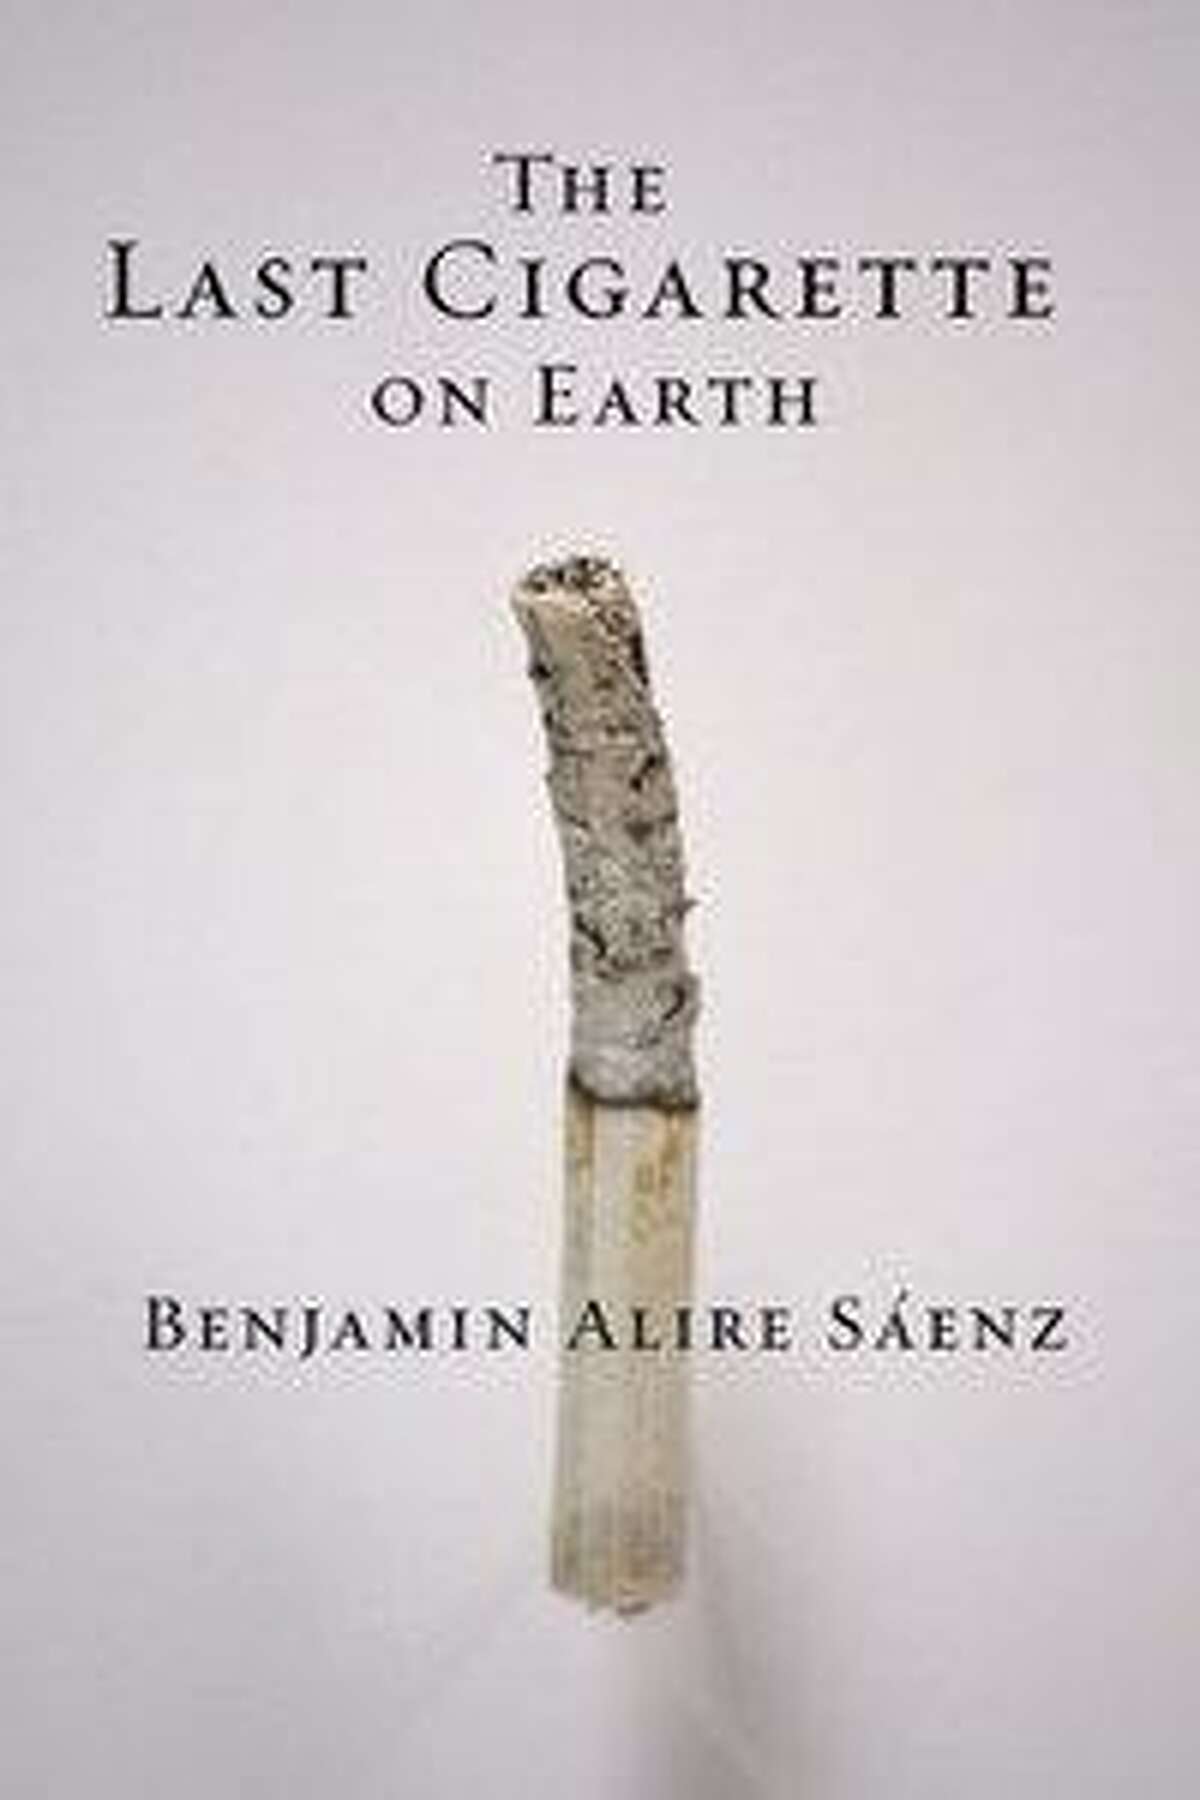 “The Last Cigarette on Earth” by Benjamin Alire Saenz